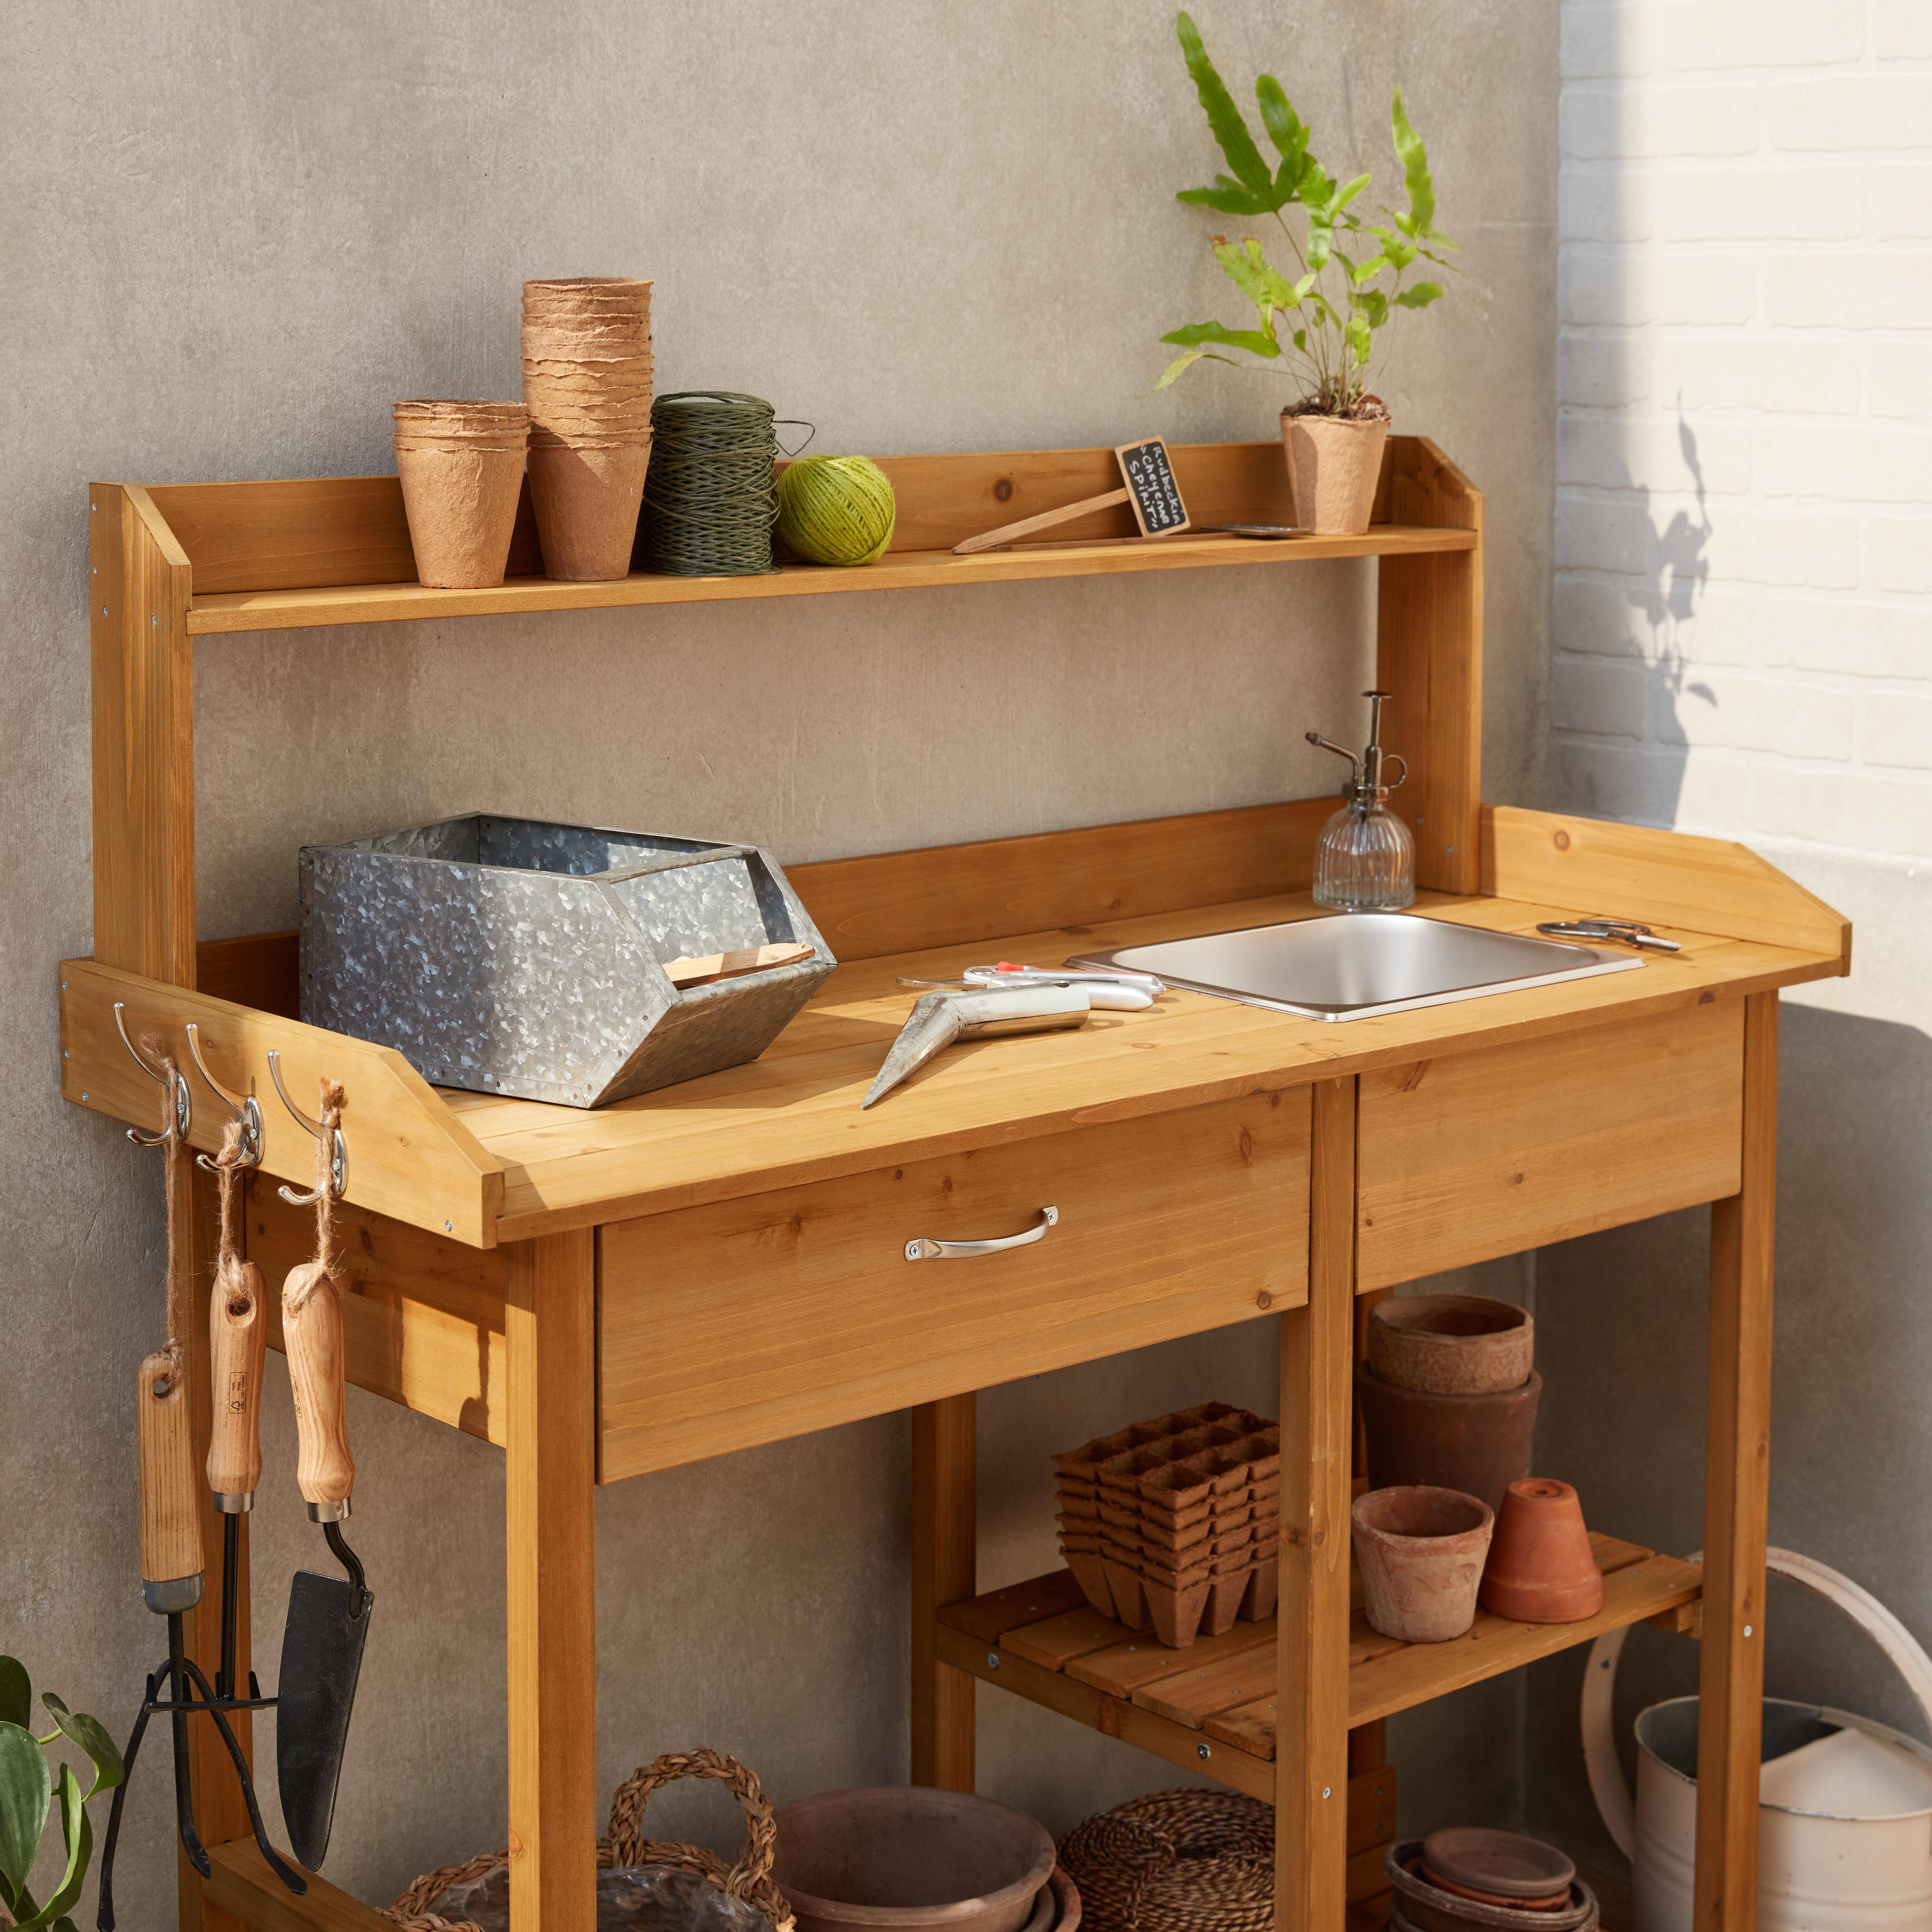 Capucine mesa de madera para macetas, 1 cajón, 2 estantes, 1 fregadero, ganchos Photo2